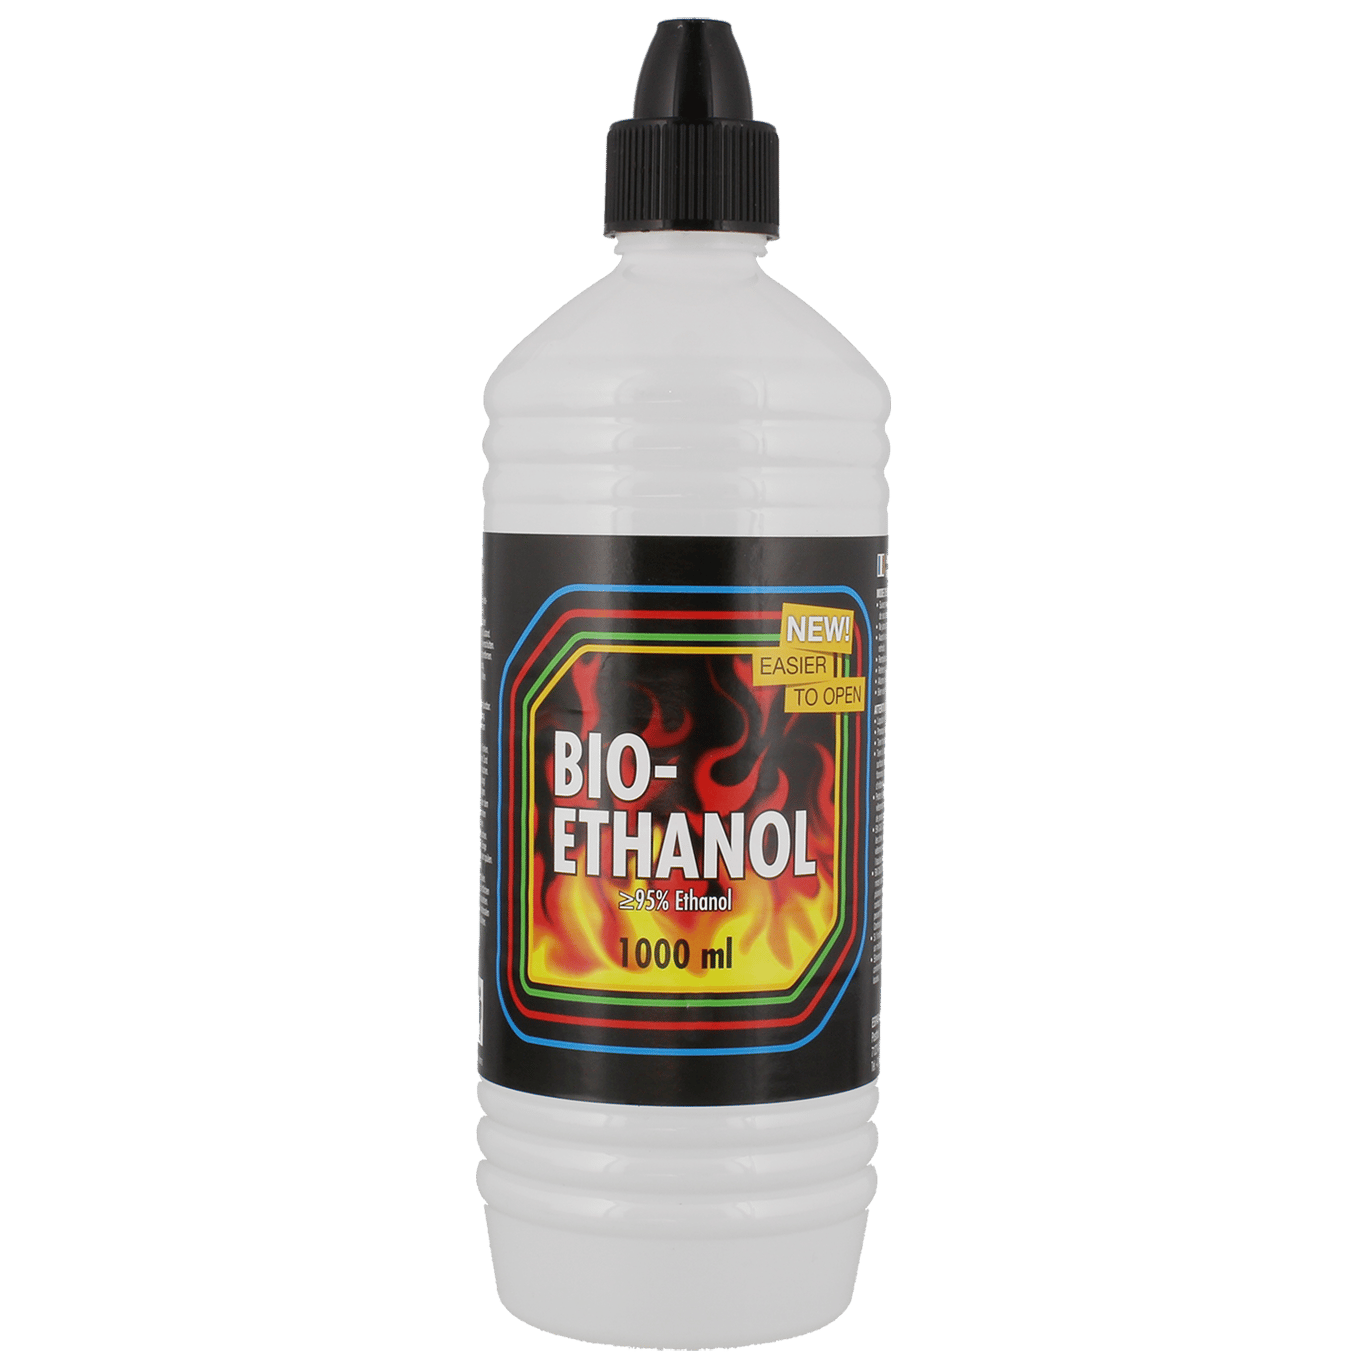 Bio-ethanol Action.com